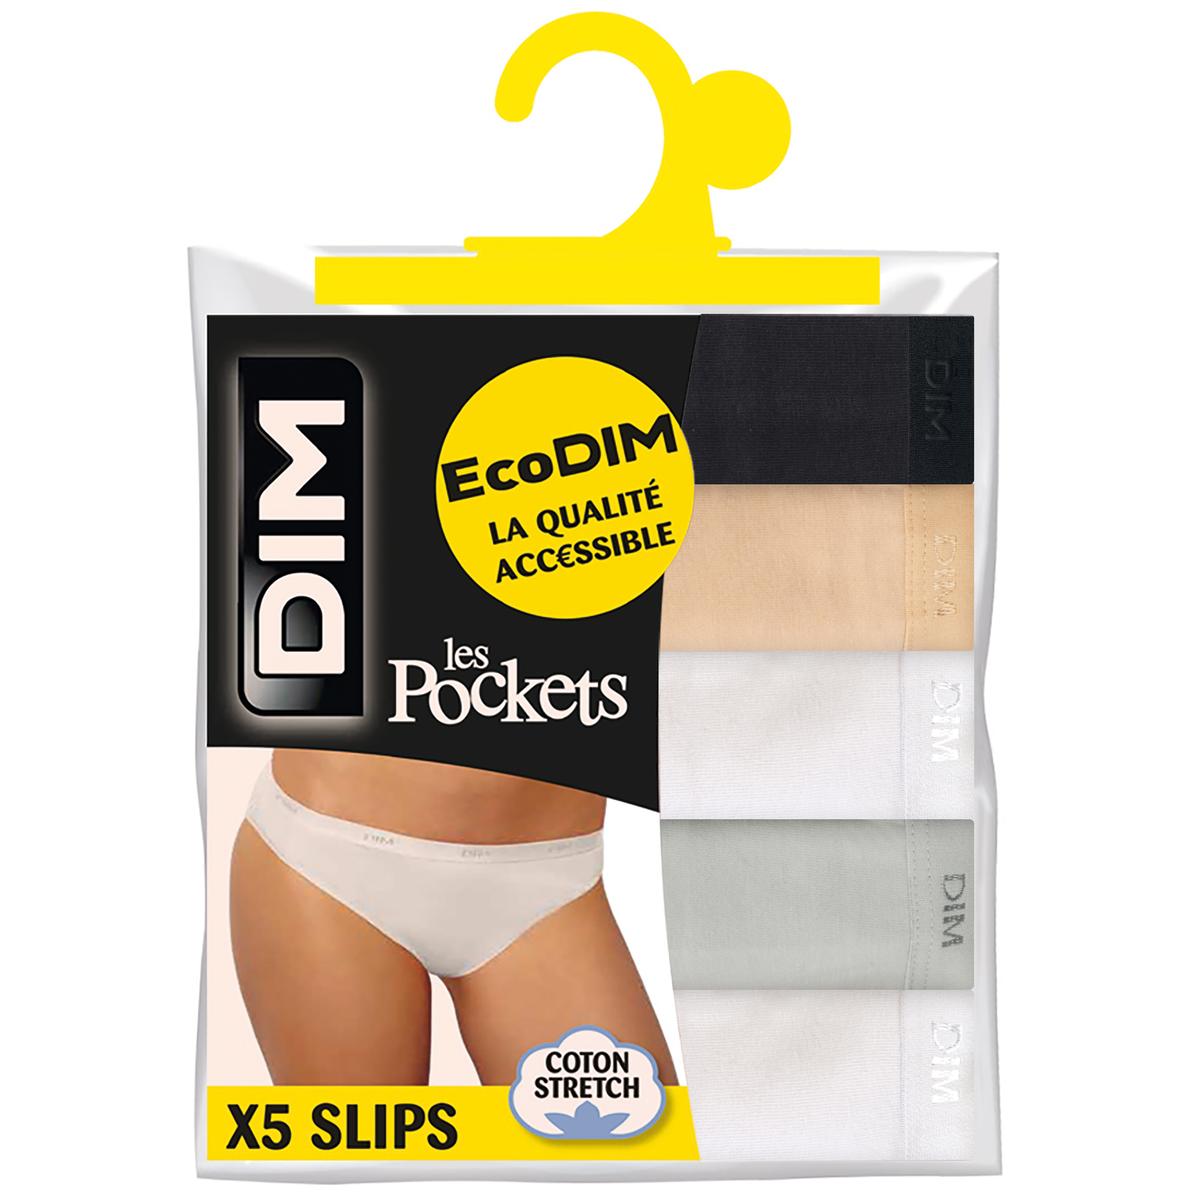 DIM Women's Les Pockets Ecodim Cotton Comfortable & Soft x6